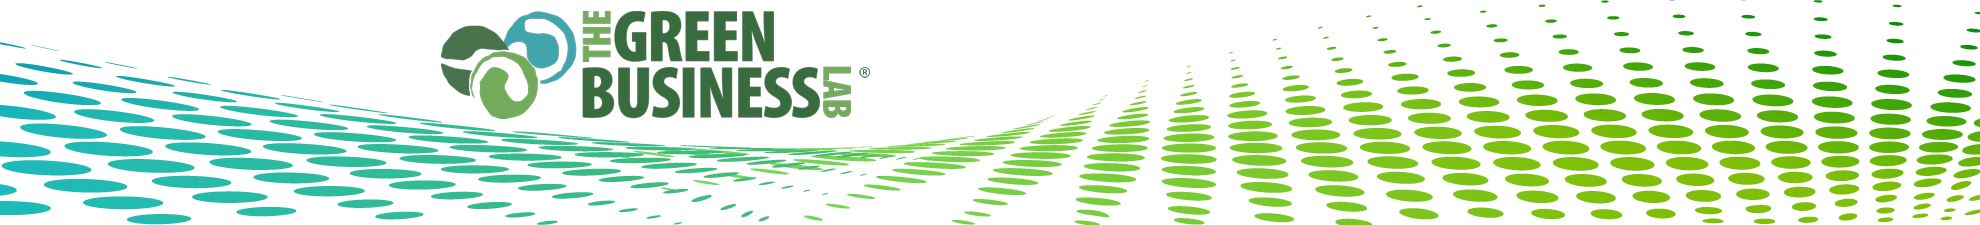 Green Business Lab Logo